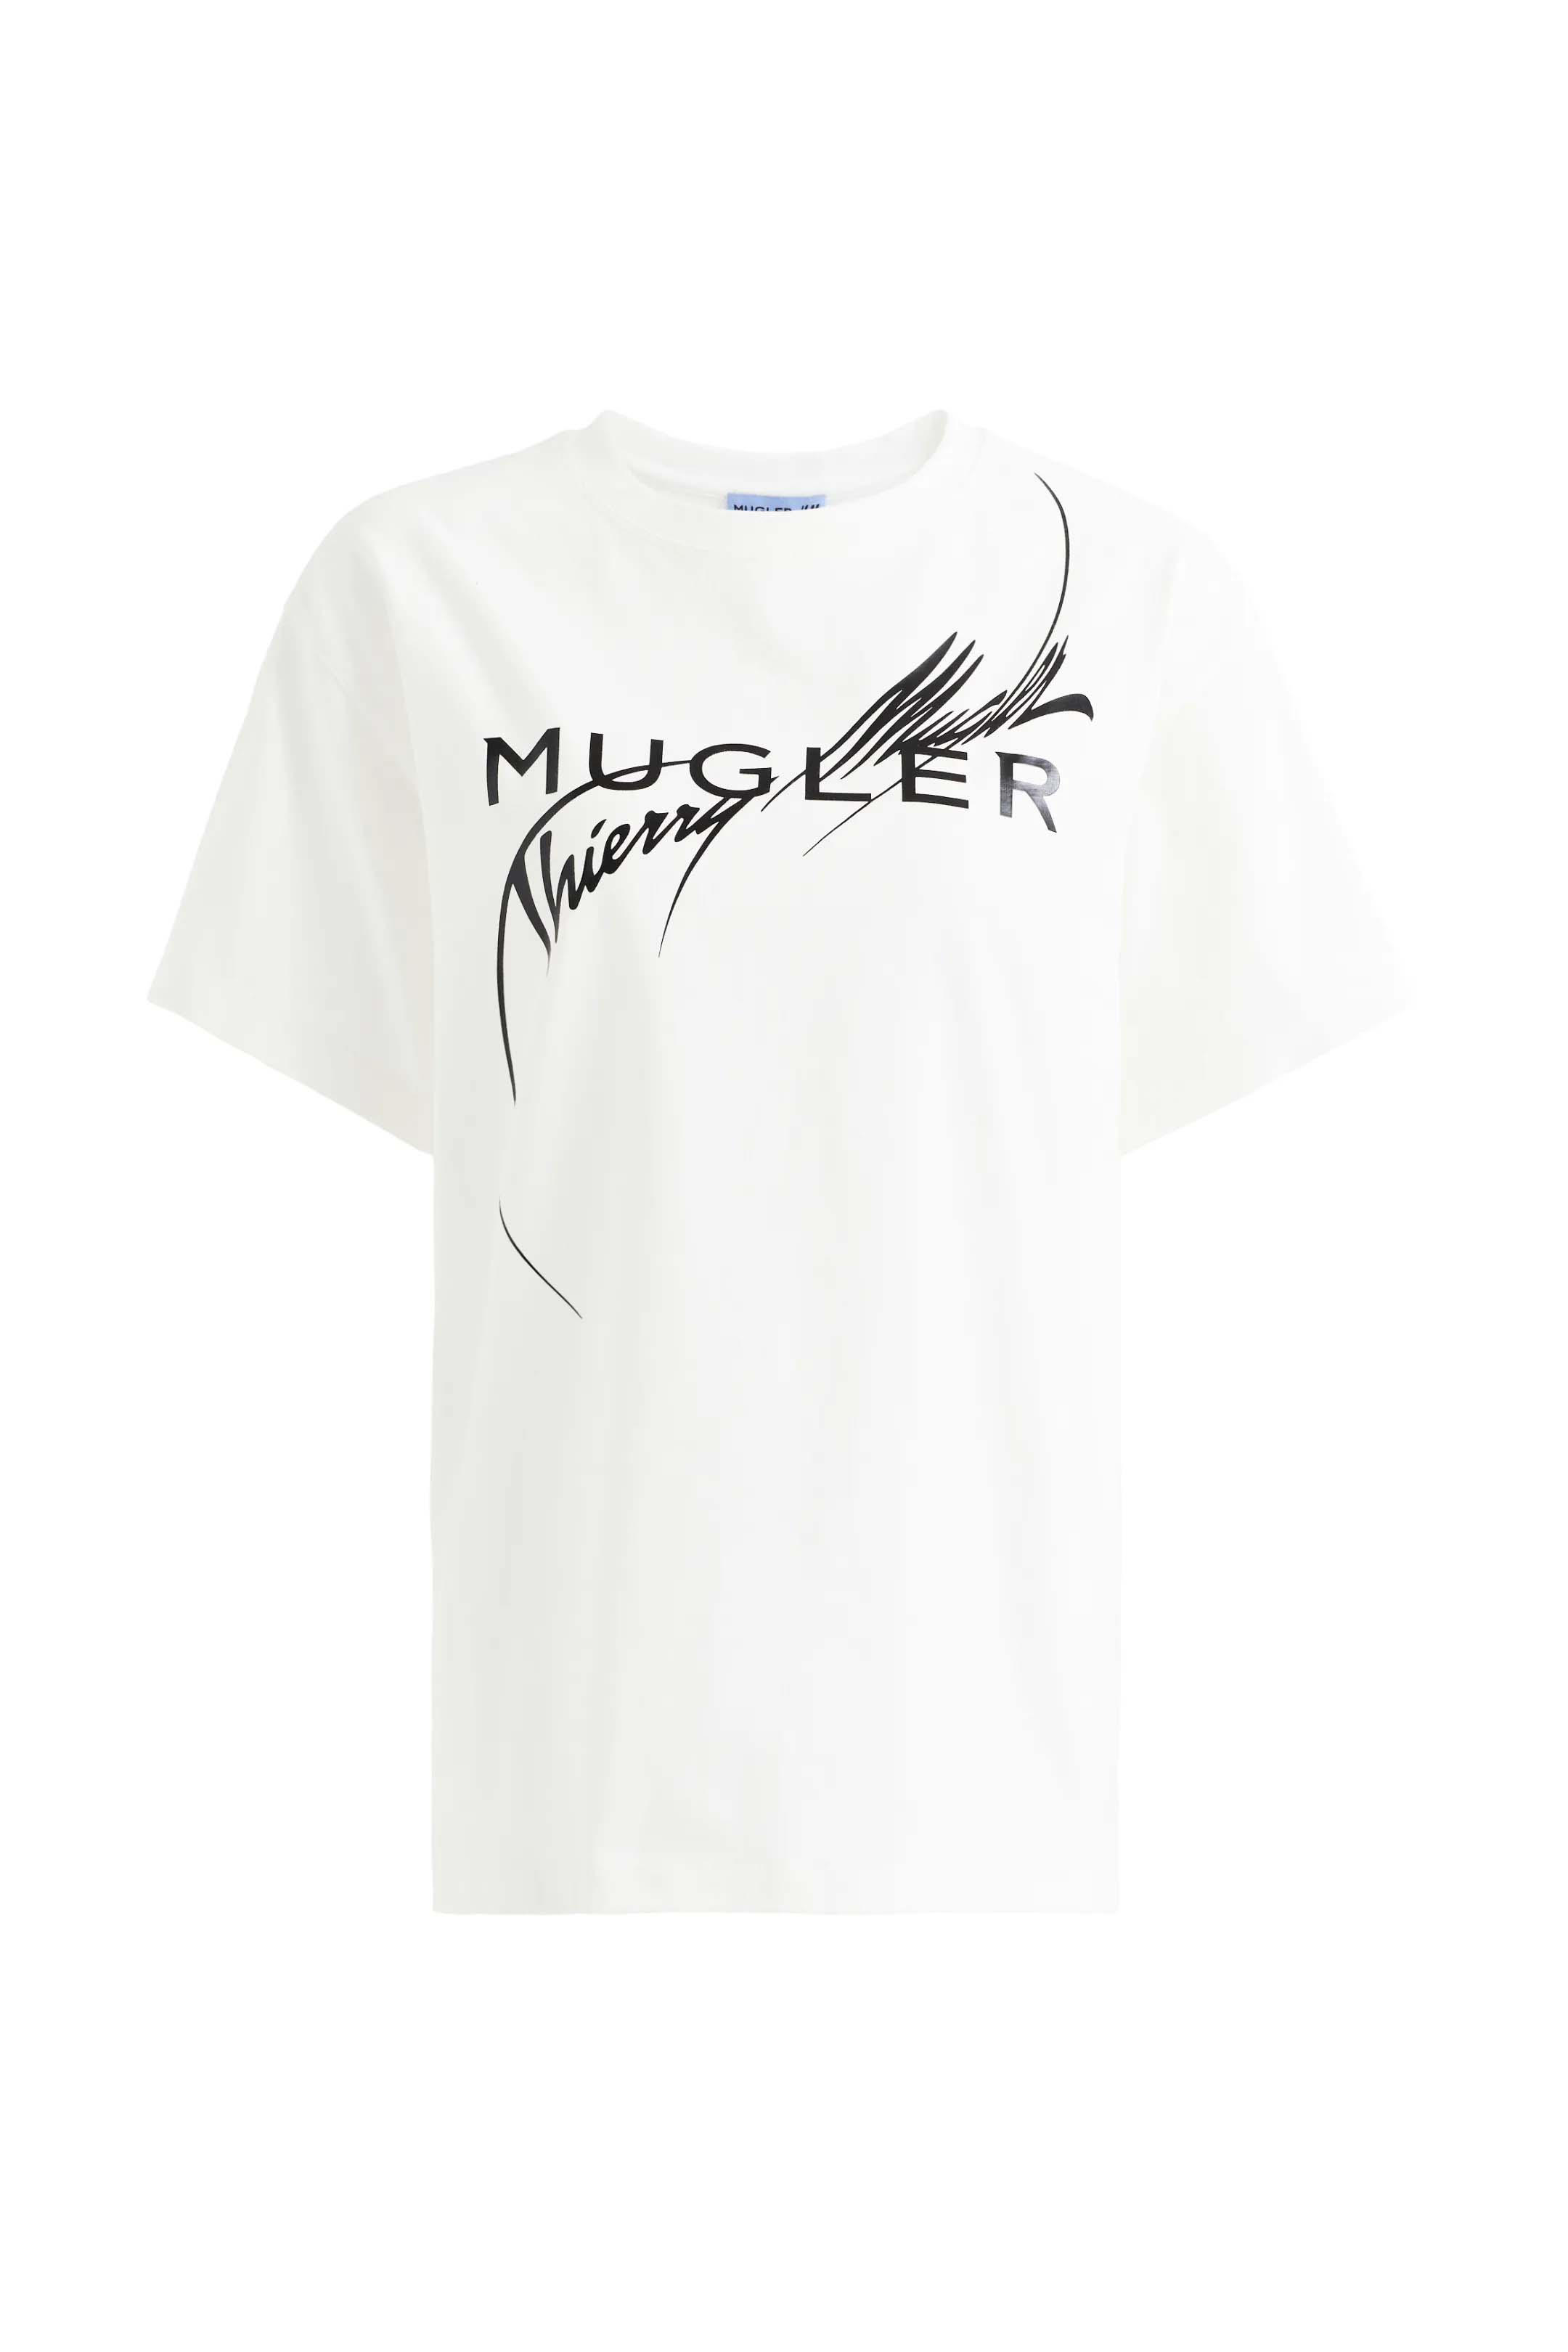 Mugler H&M Printed T-shirt White - SS23 - US